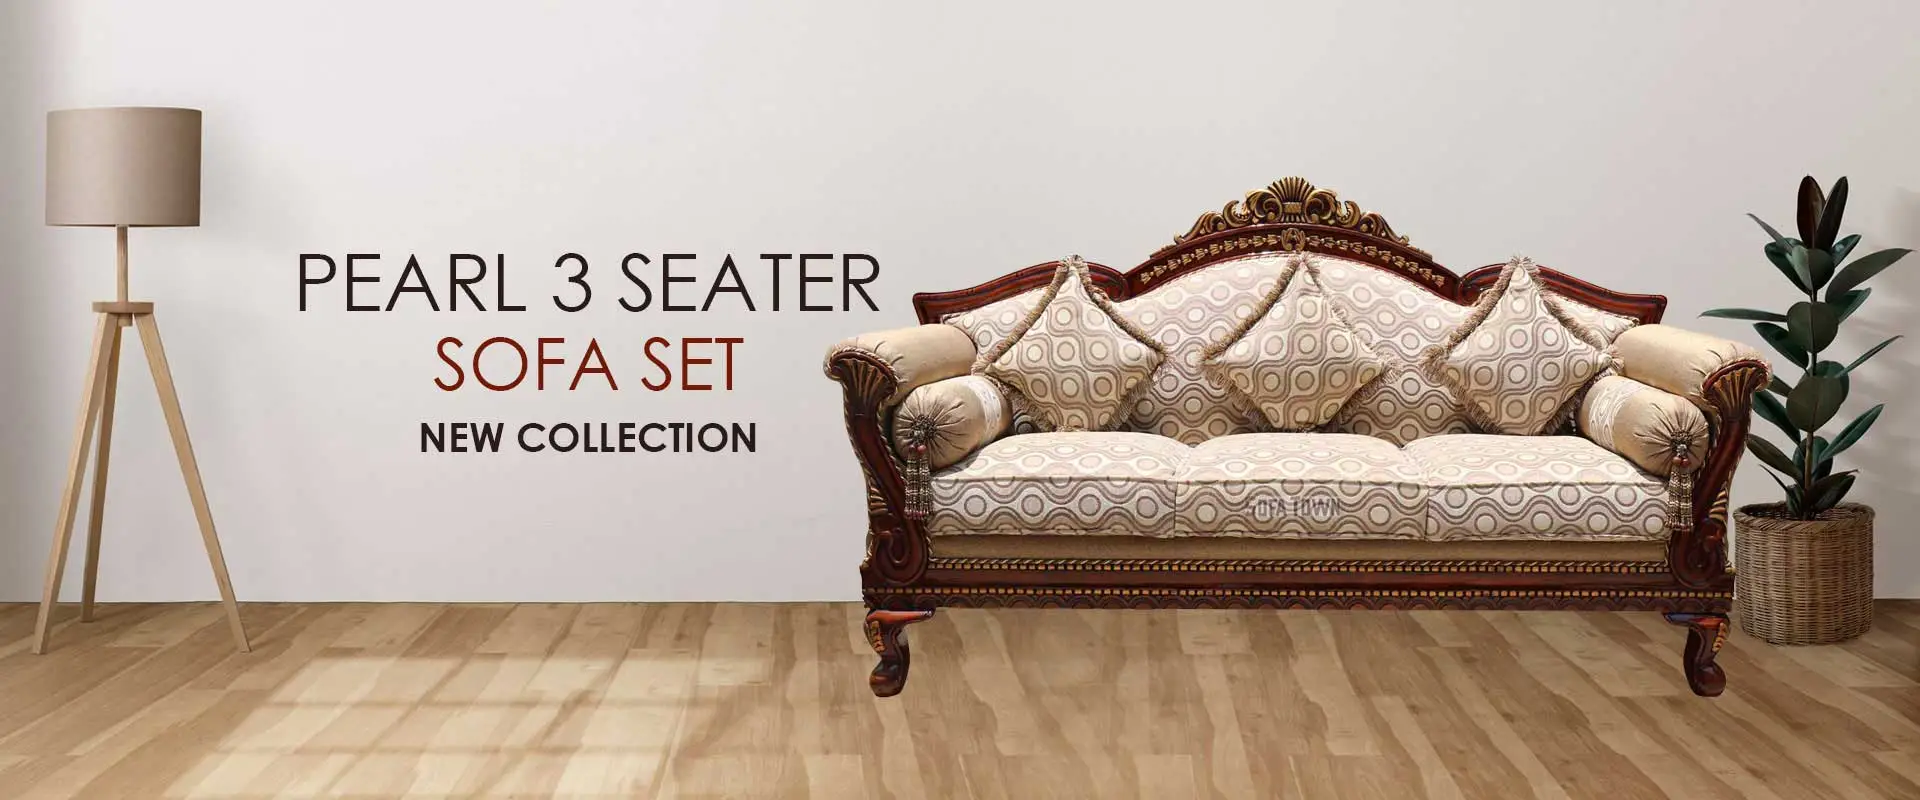 Pearl 3 Seater Sofa Set  Manufacturers in Gurgaon